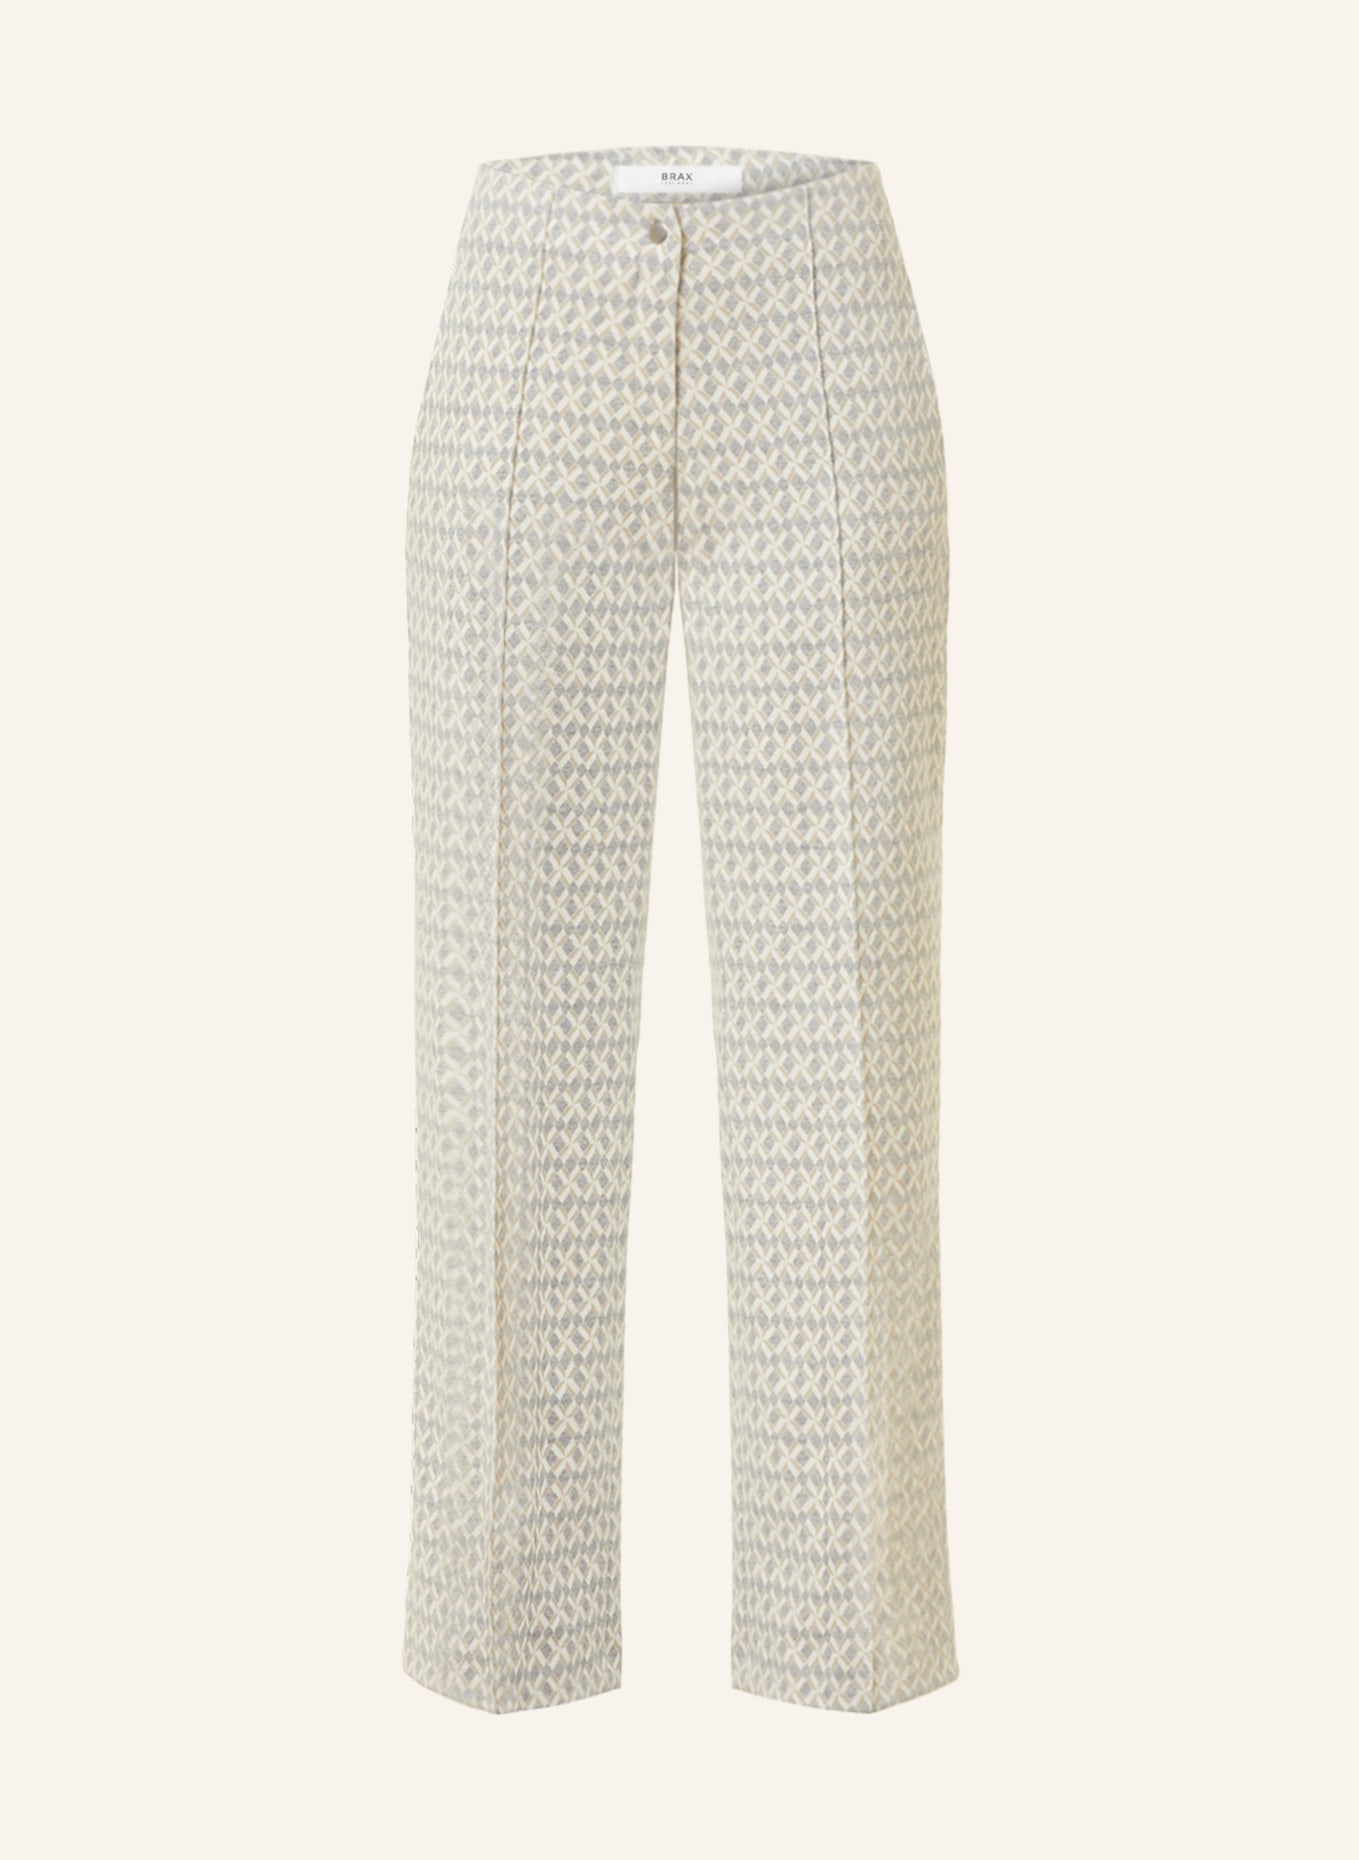 Maine UK 12 Short Grey Pablo Smart Trousers Debenhams NWT | eBay